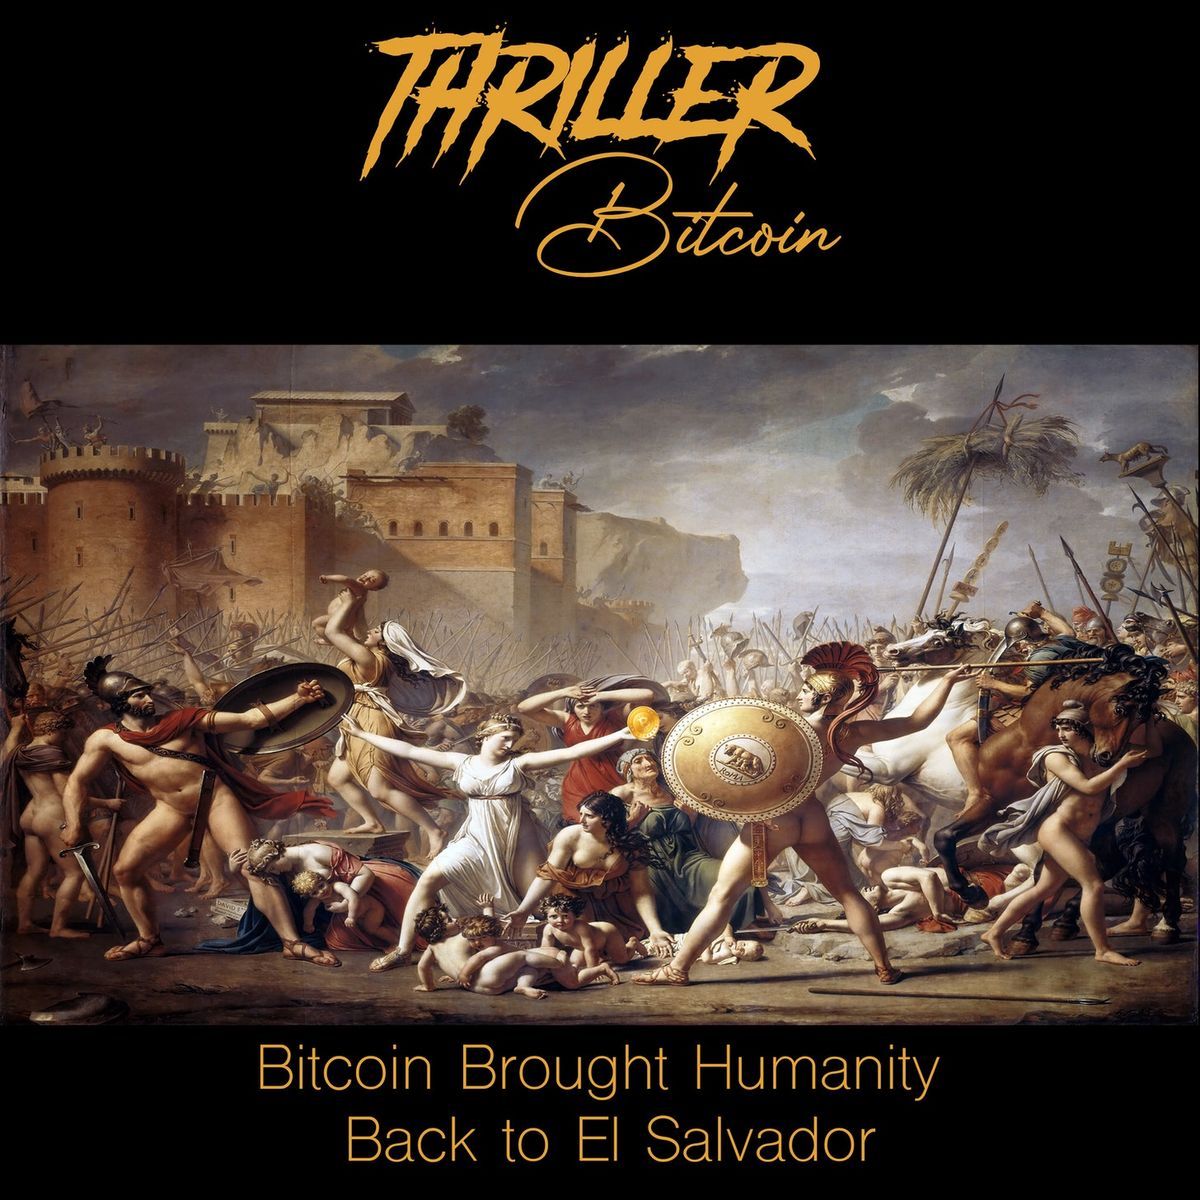 🎧 Thriller Bitcoin: Bitcoin Brought Humanity Back to El Salvador